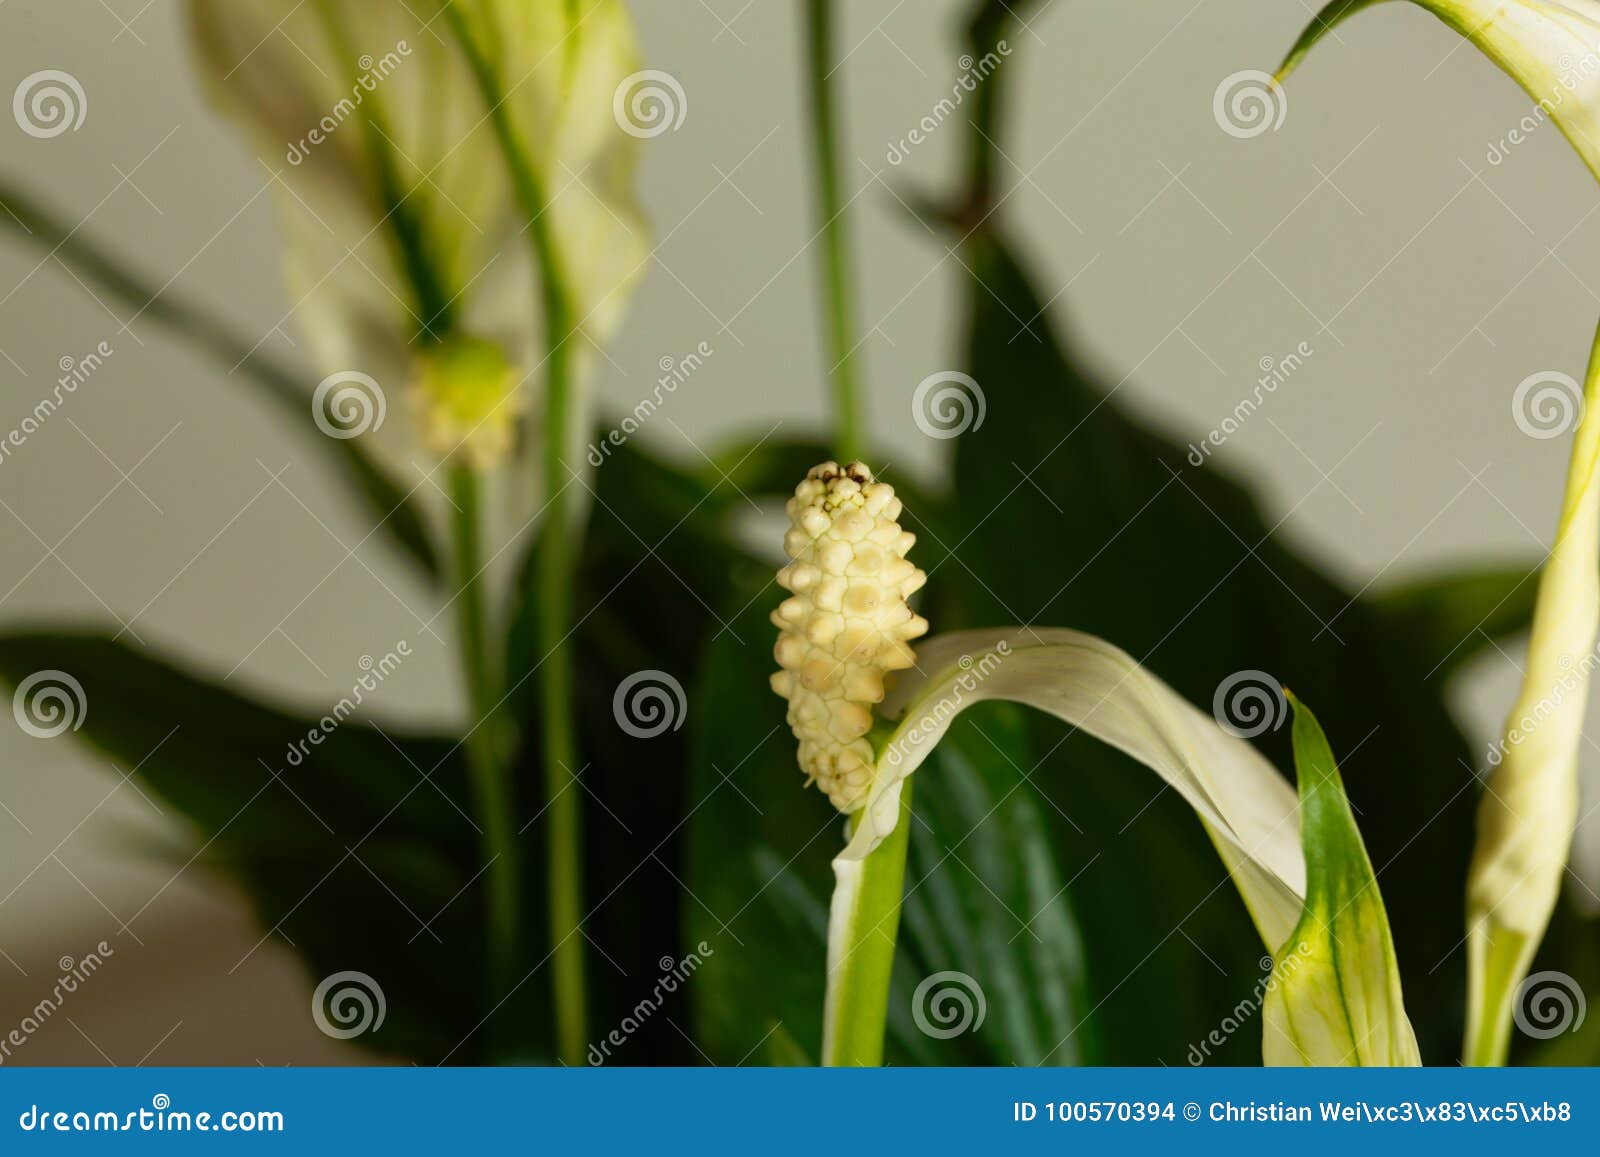 peace lily flower spathiphyllum floribundum